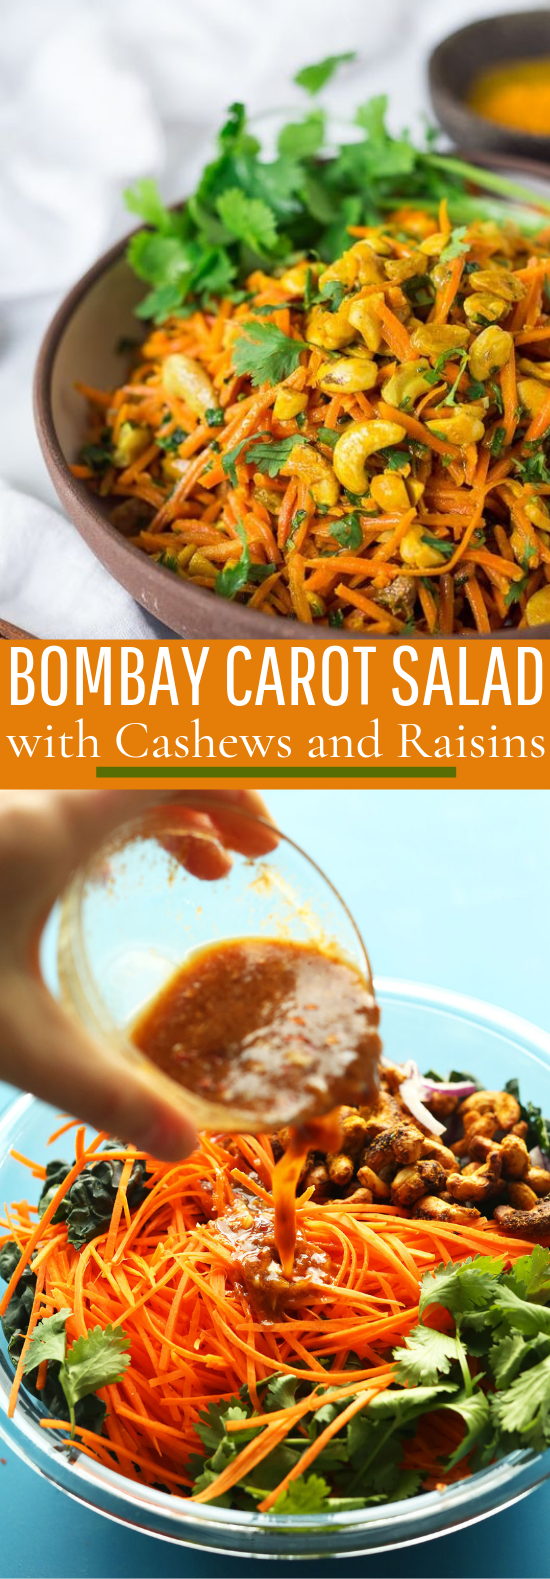 Bombay Carrot Salad with Cashews and Raisins #vegetarian #salad